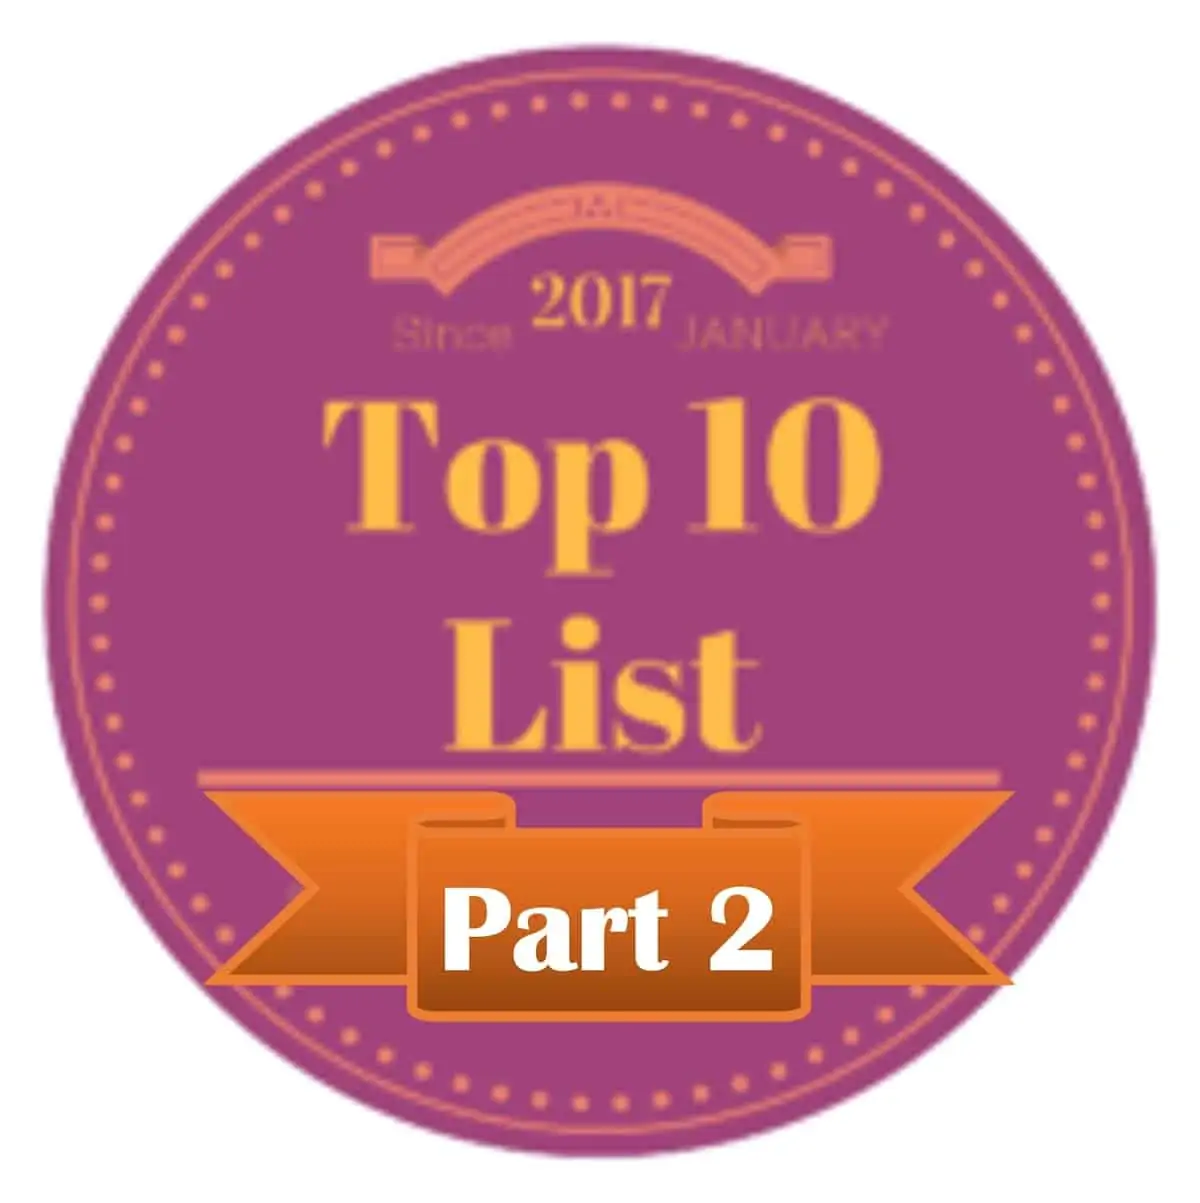 Our 2017 Top 10 List! – Part 2